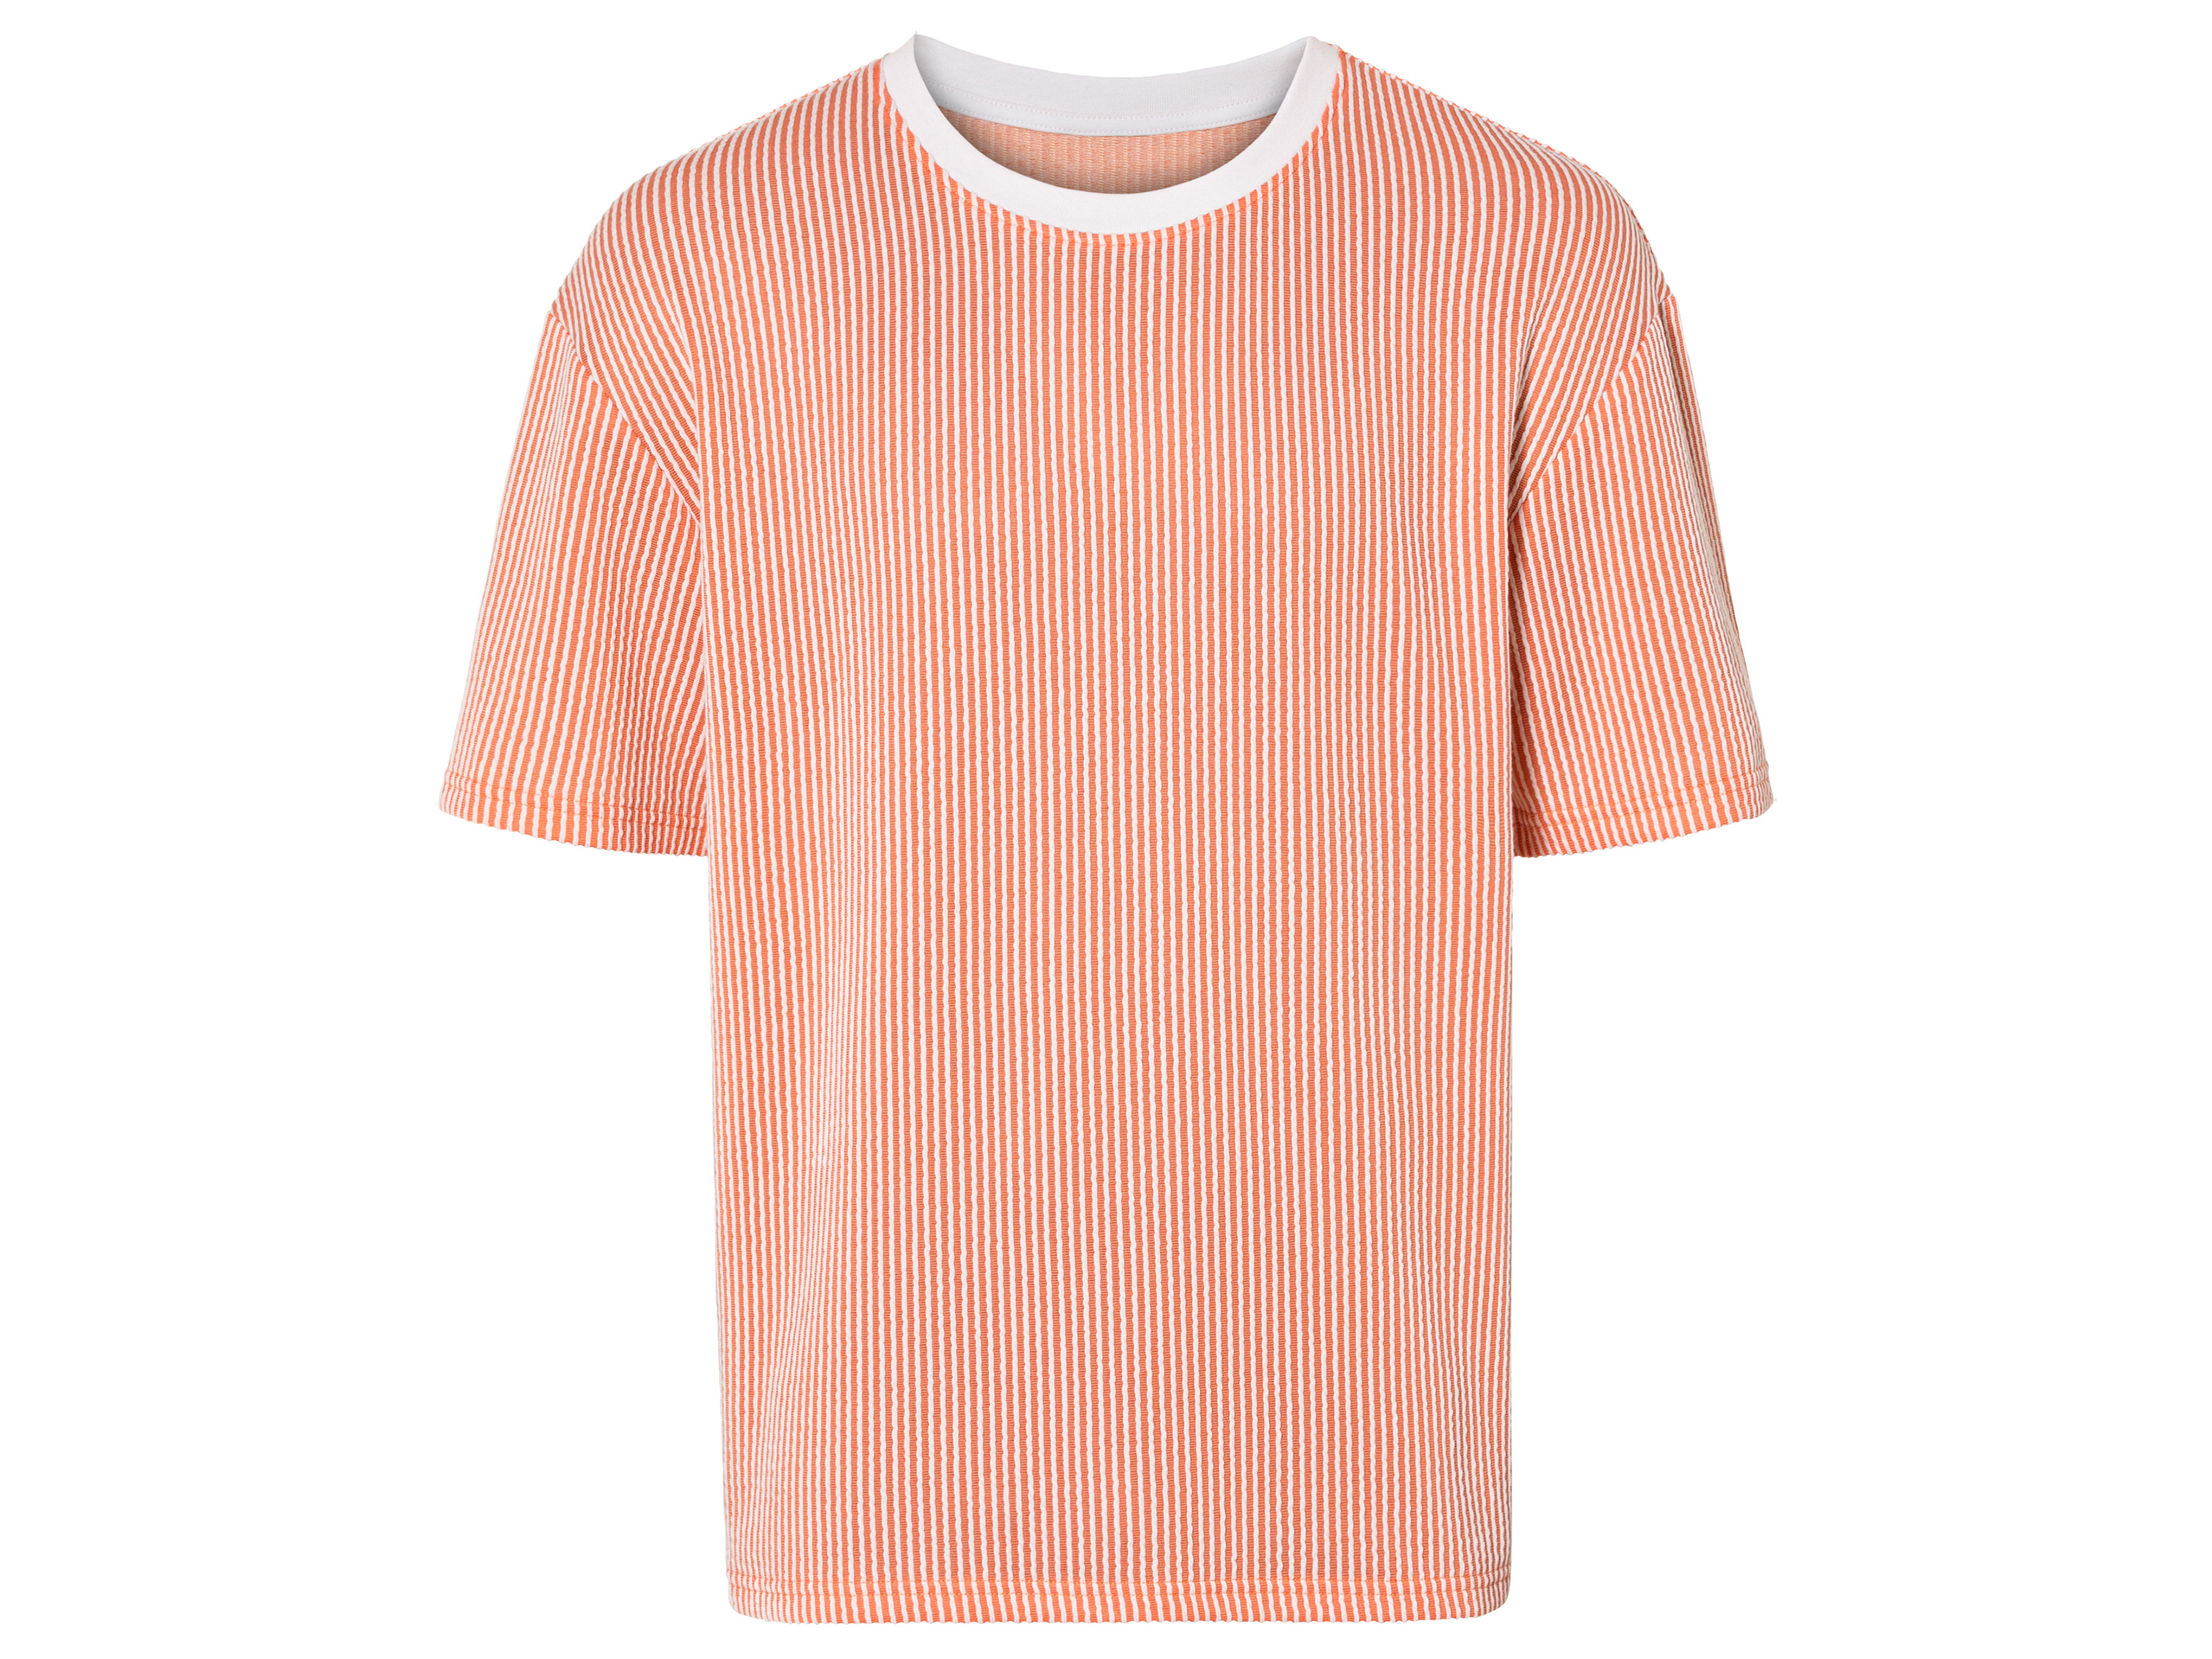 LIVERGY Heren T-shirt (XL (56/58), Oranje/wit)